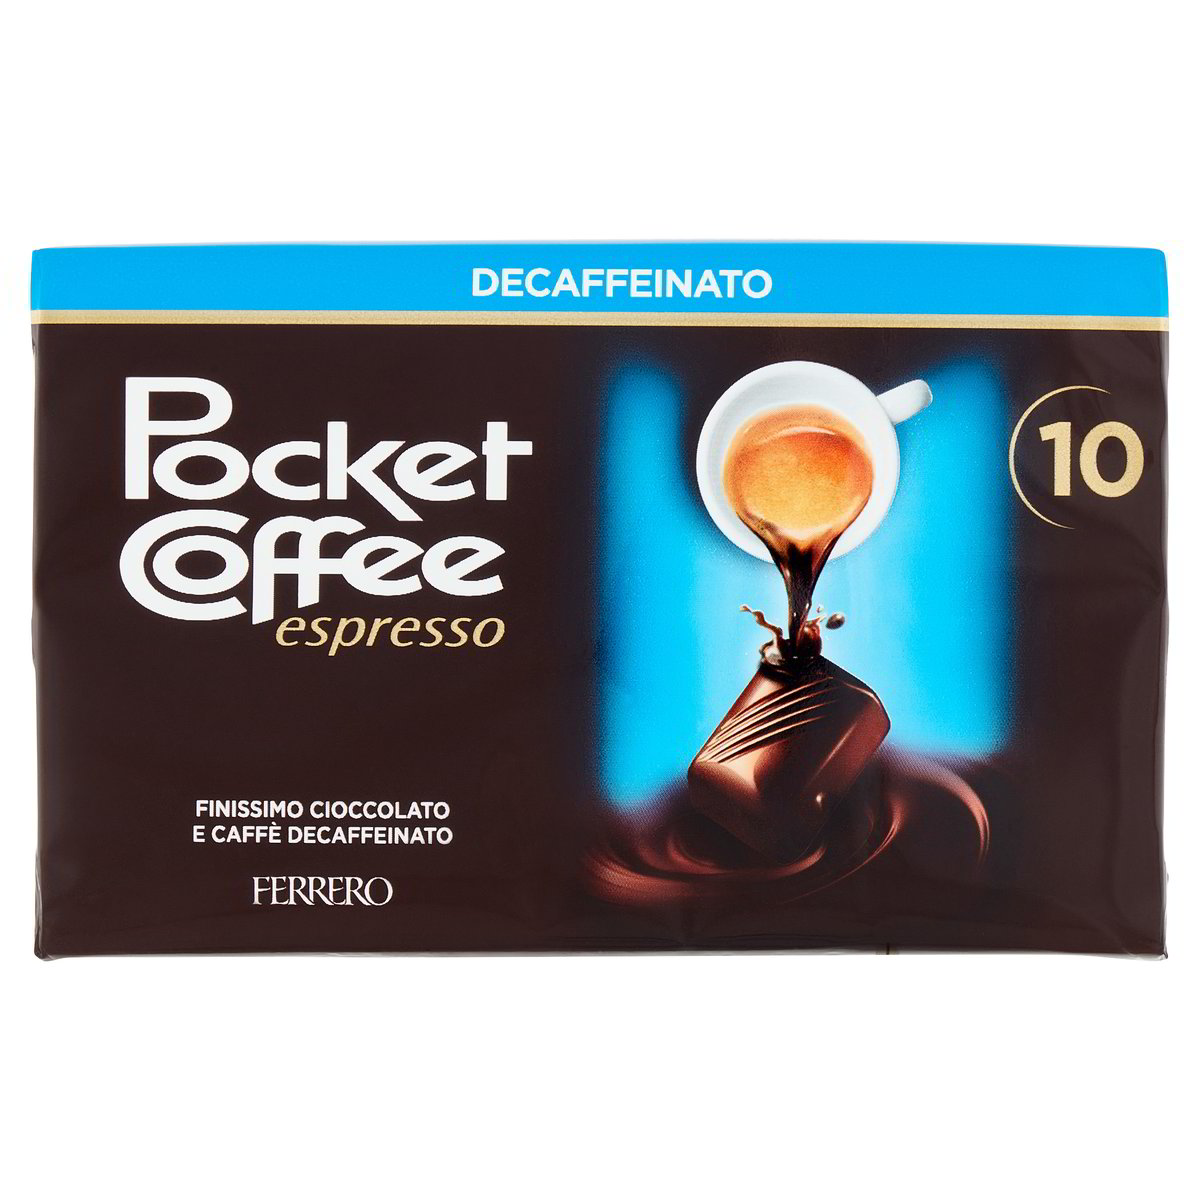 Pocket Coffee Espresso Decaffeinato